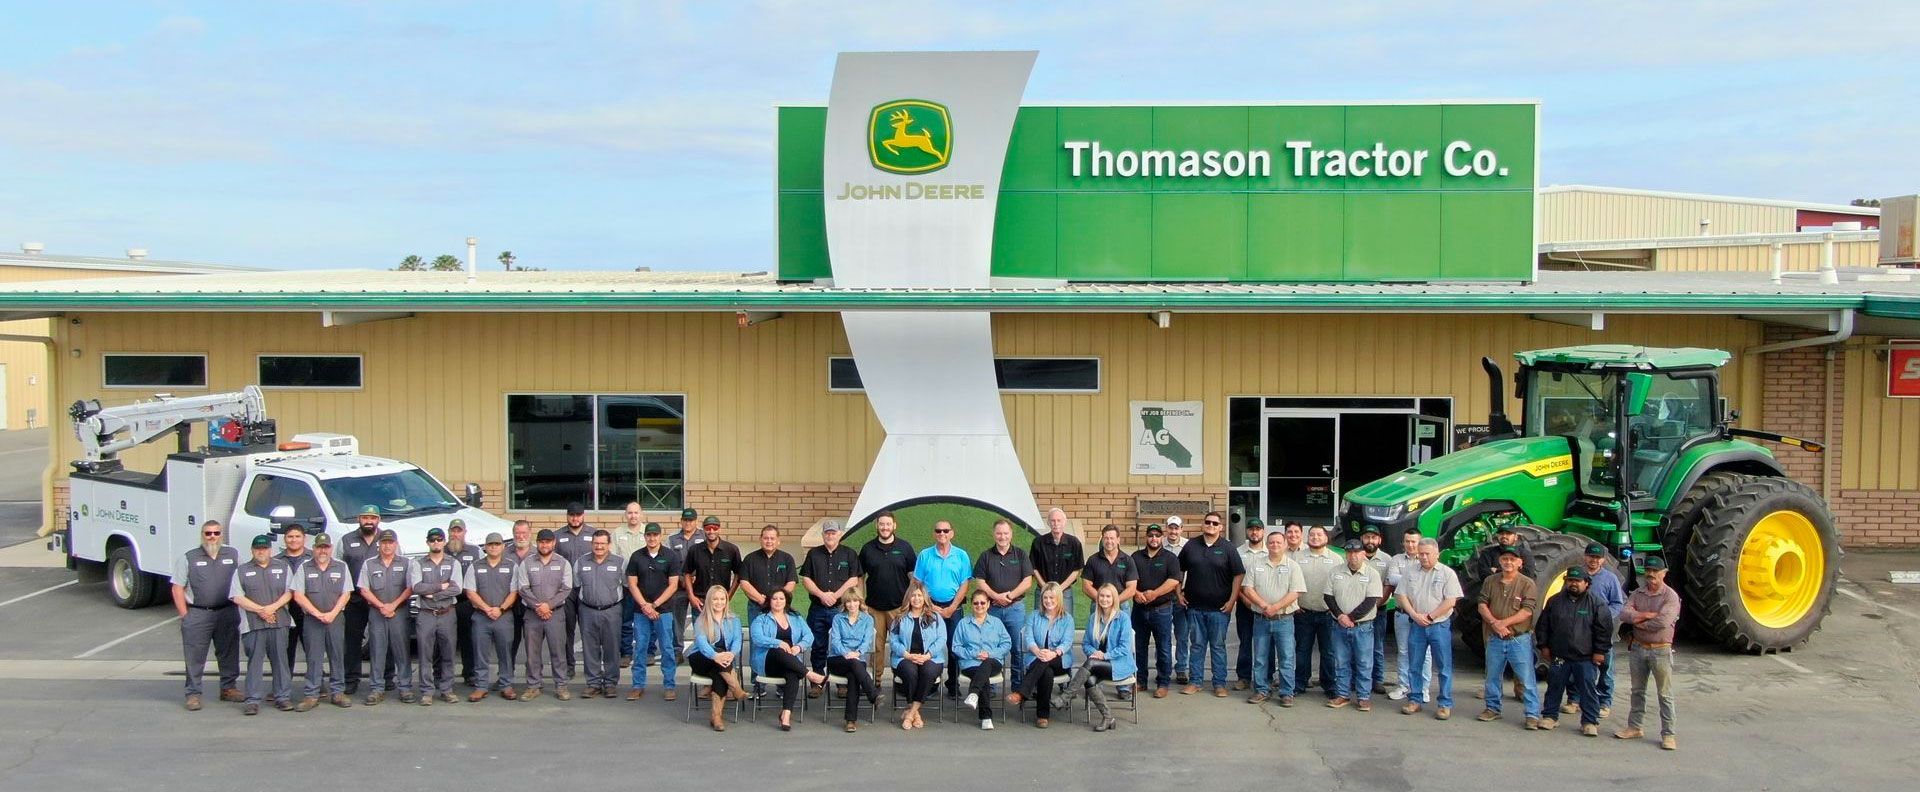 Thomason Tractor Co. Group